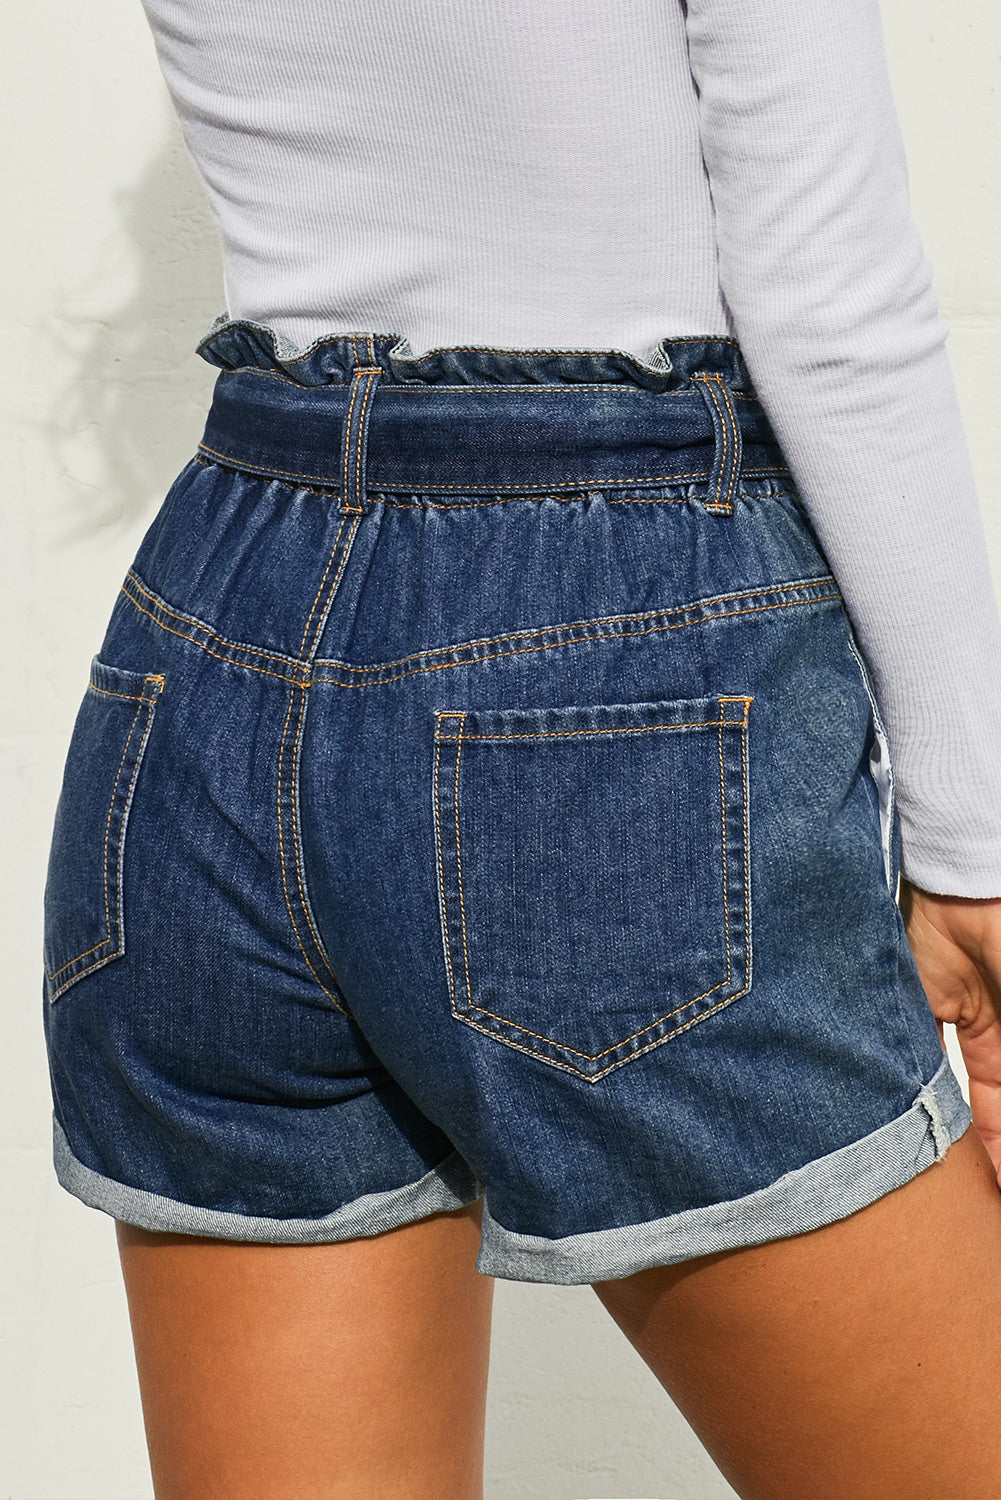 Nile Lily 100% Cotton Womens Denim Shorts